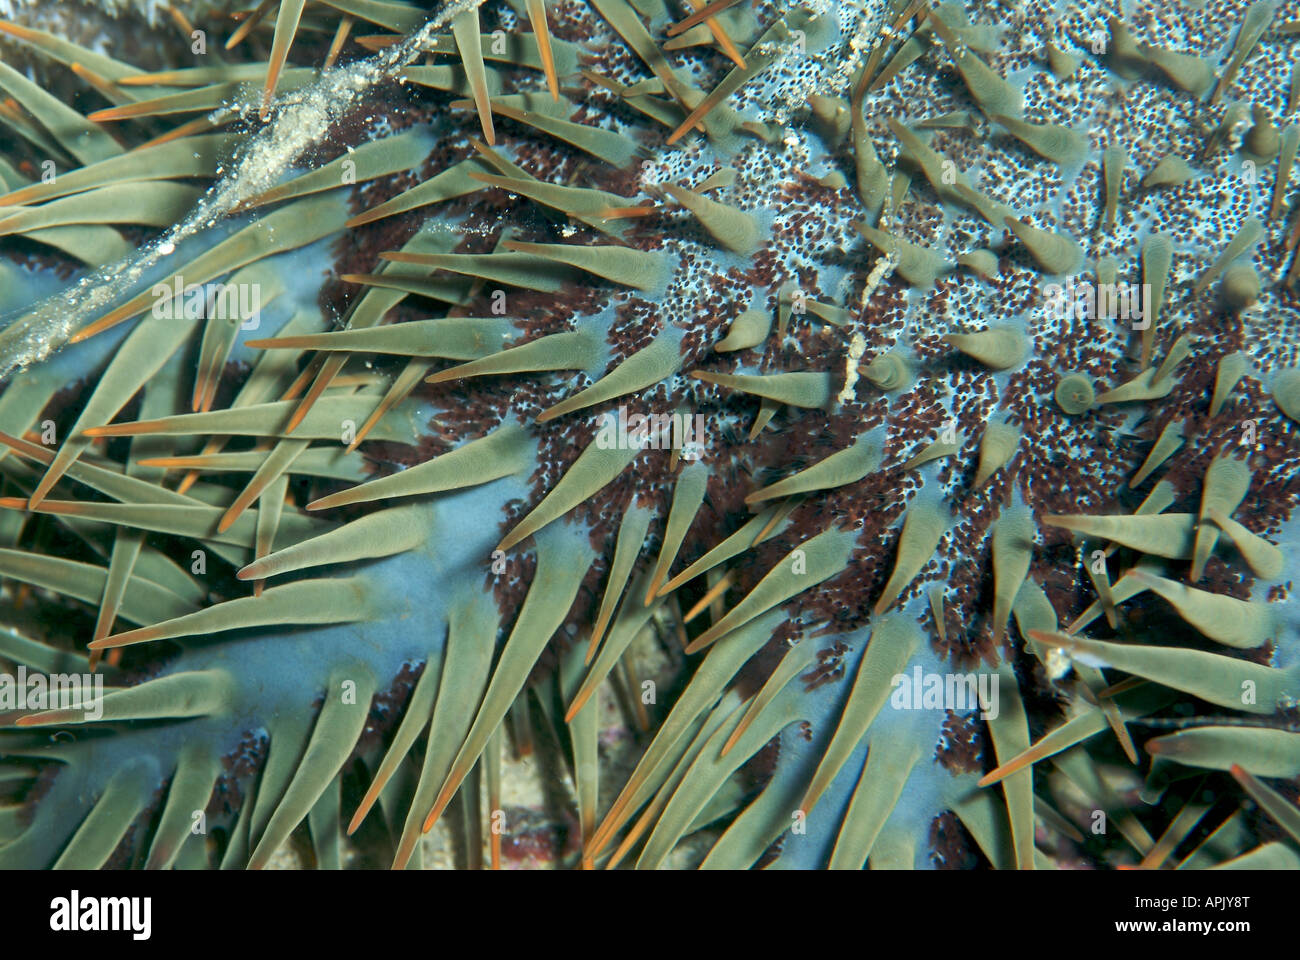 Closeup view of Crown of Thorns Starfish Stock Photo